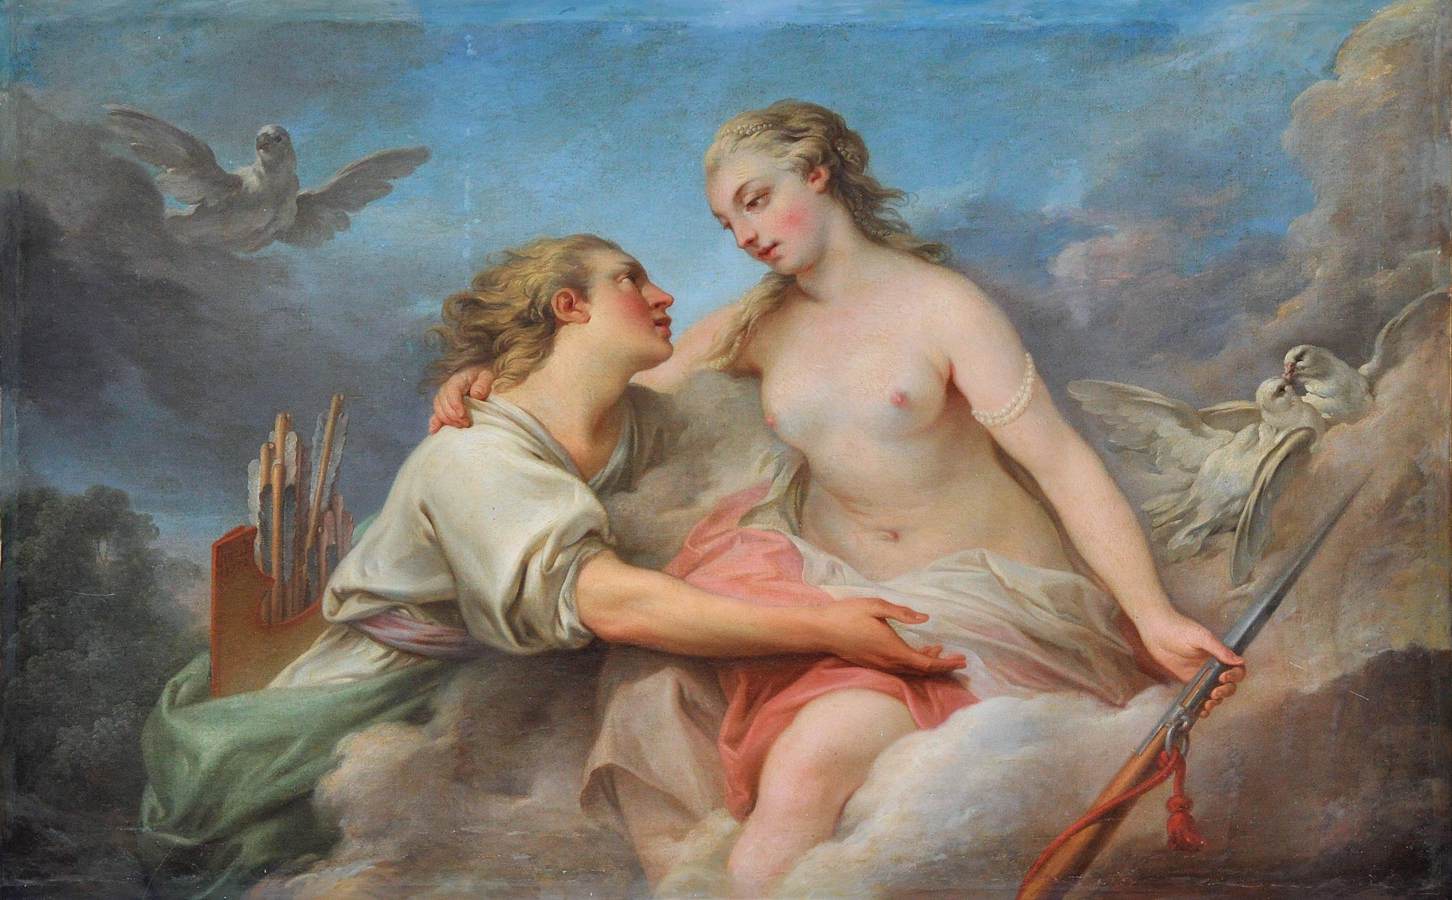 Venus og Adonis